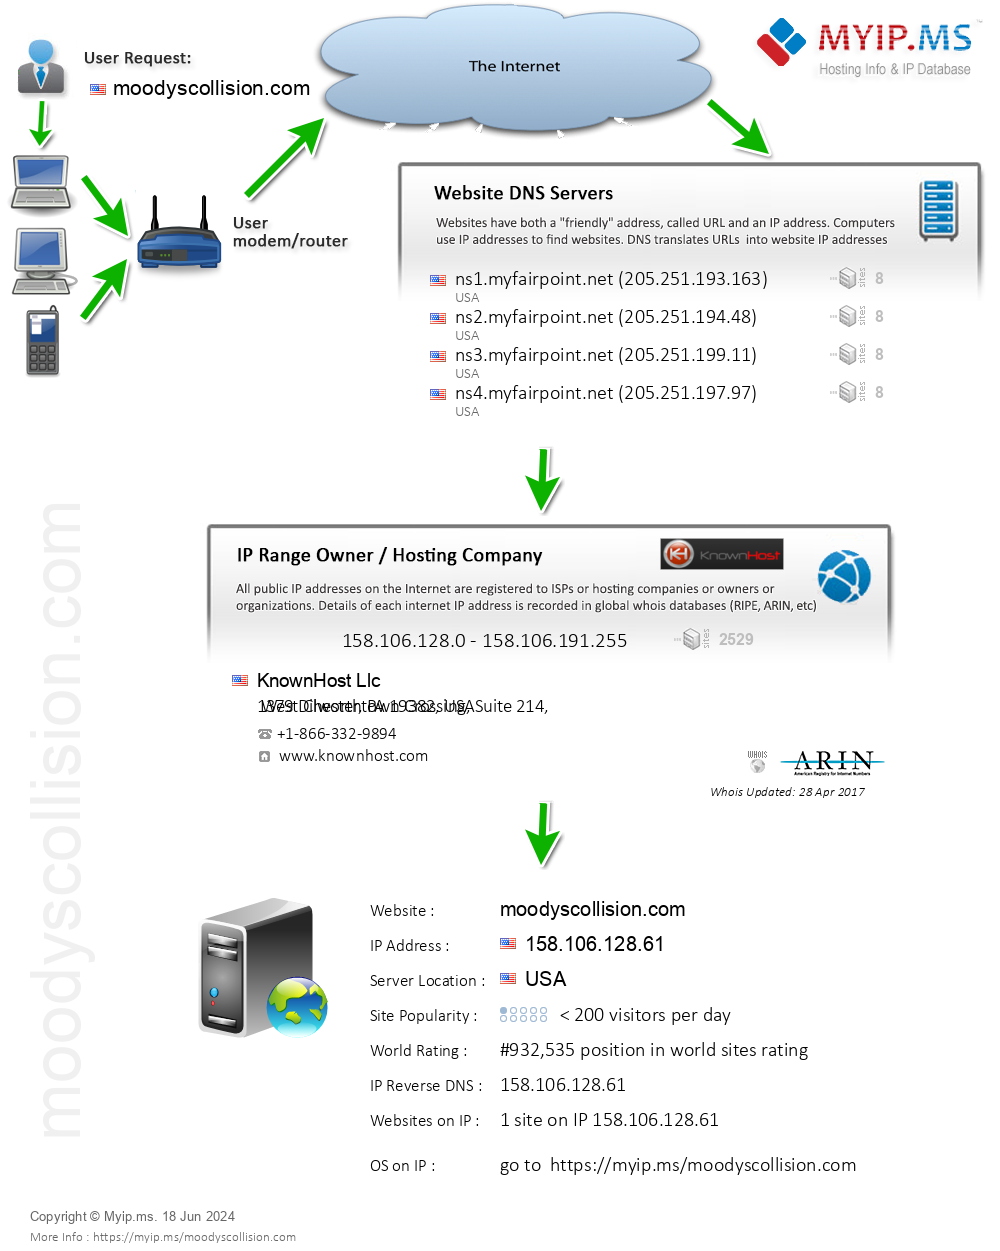 Moodyscollision.com - Website Hosting Visual IP Diagram